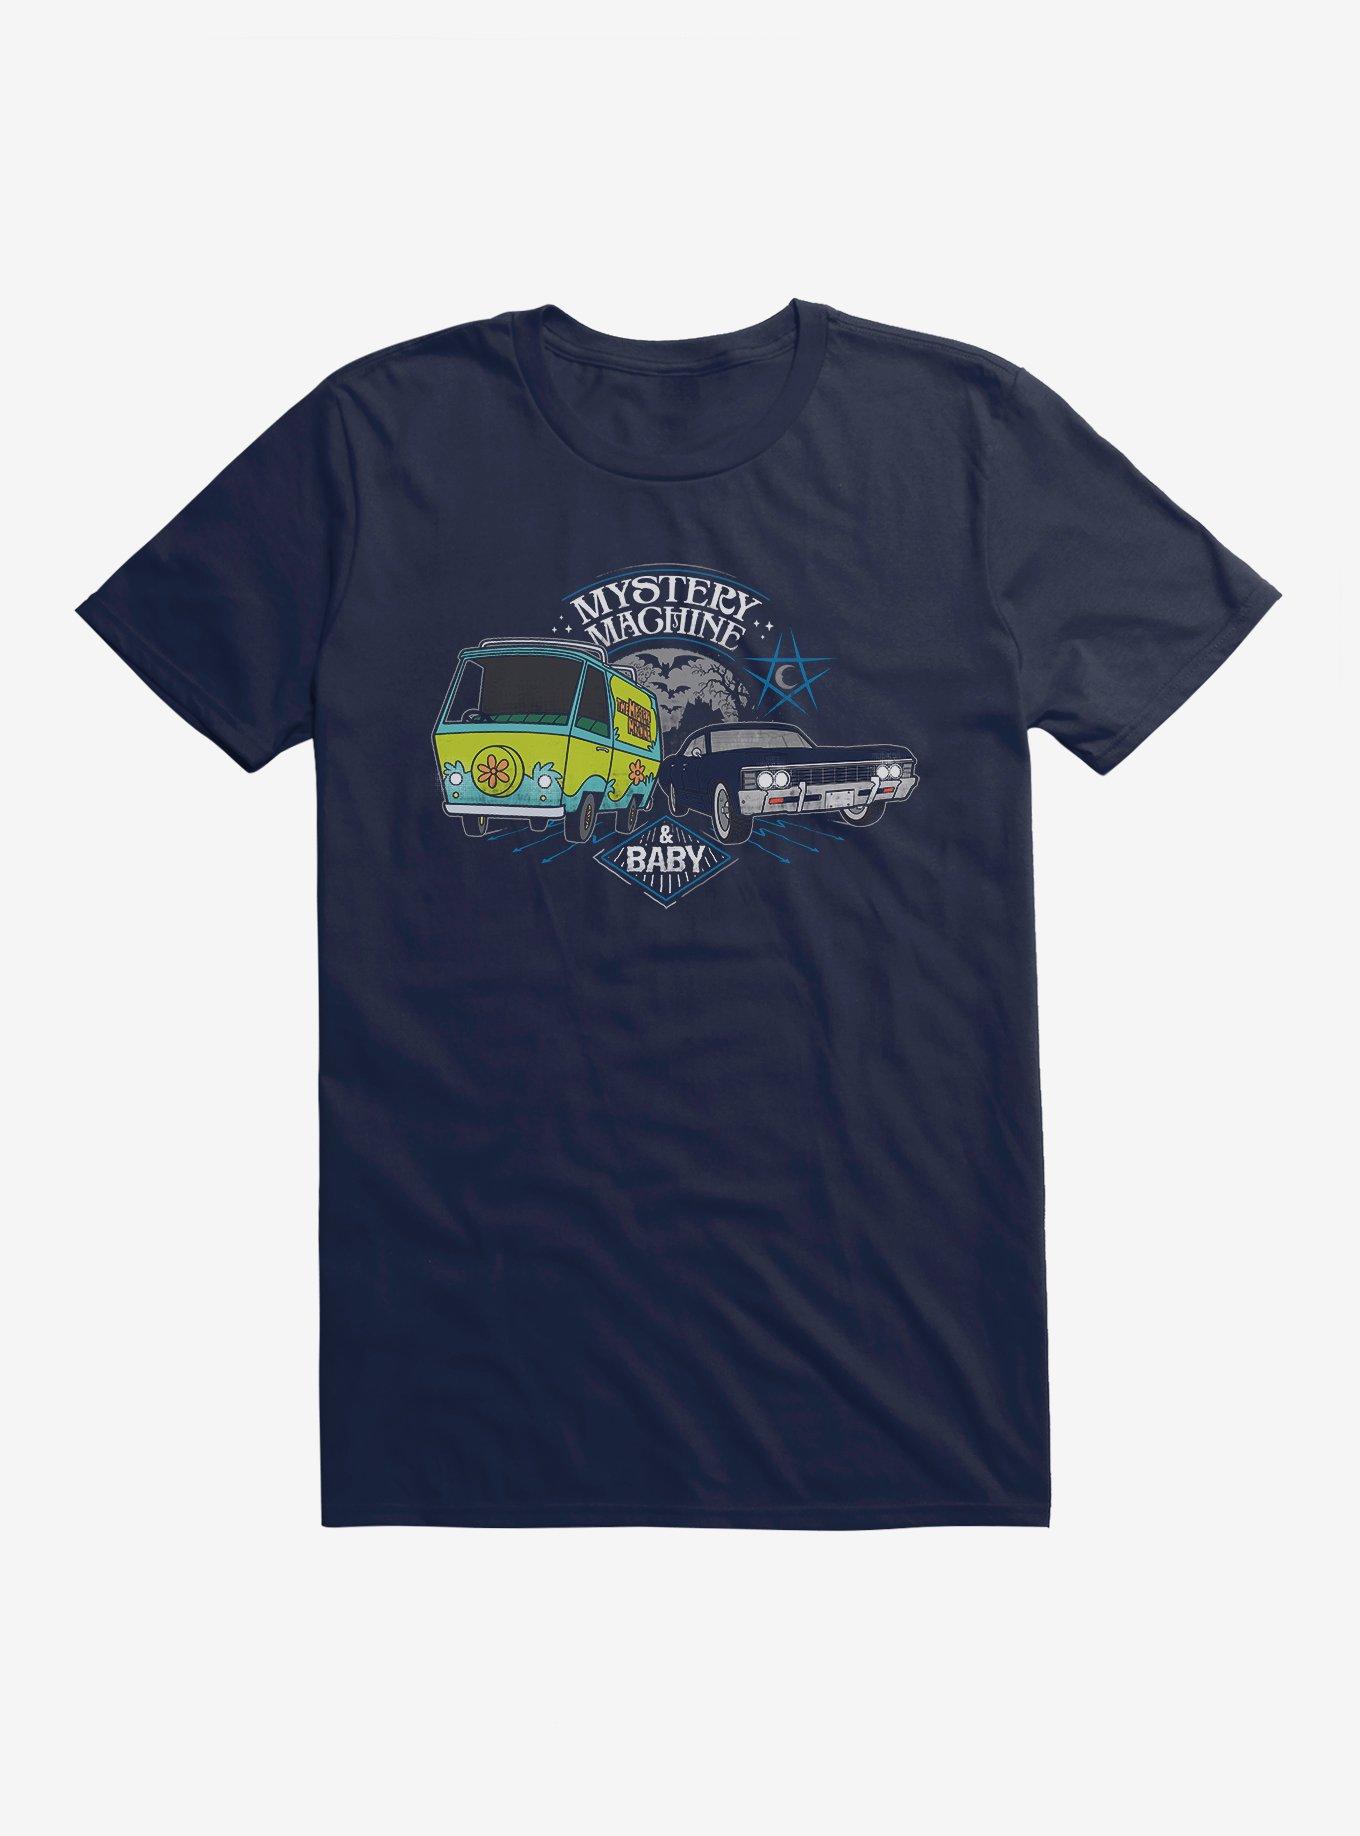 Supernatural Scoobynatural Mystery Machine T-Shirt, , hi-res